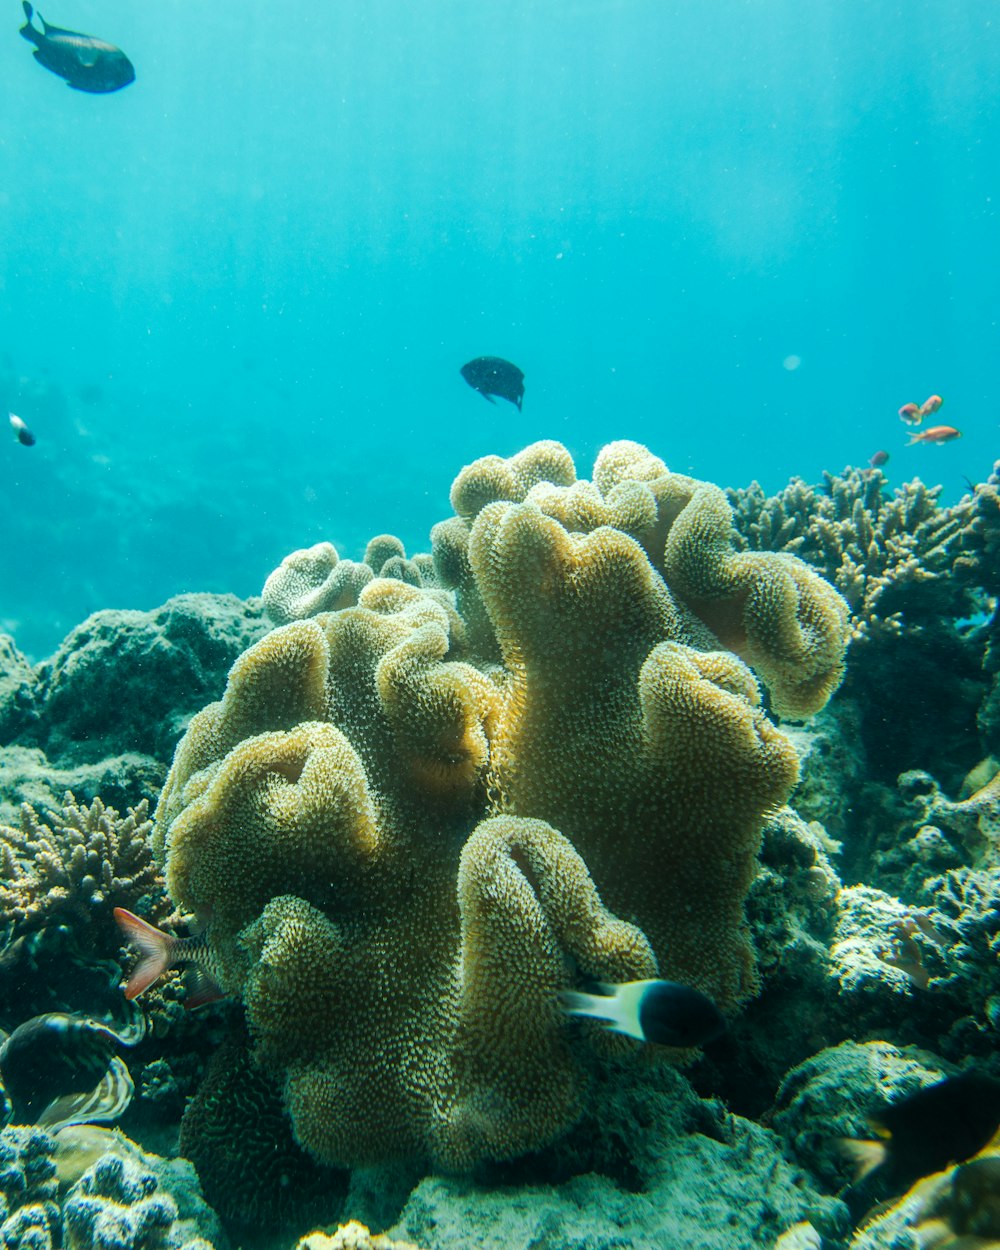 corail de mer jaune en photographie en gros plan